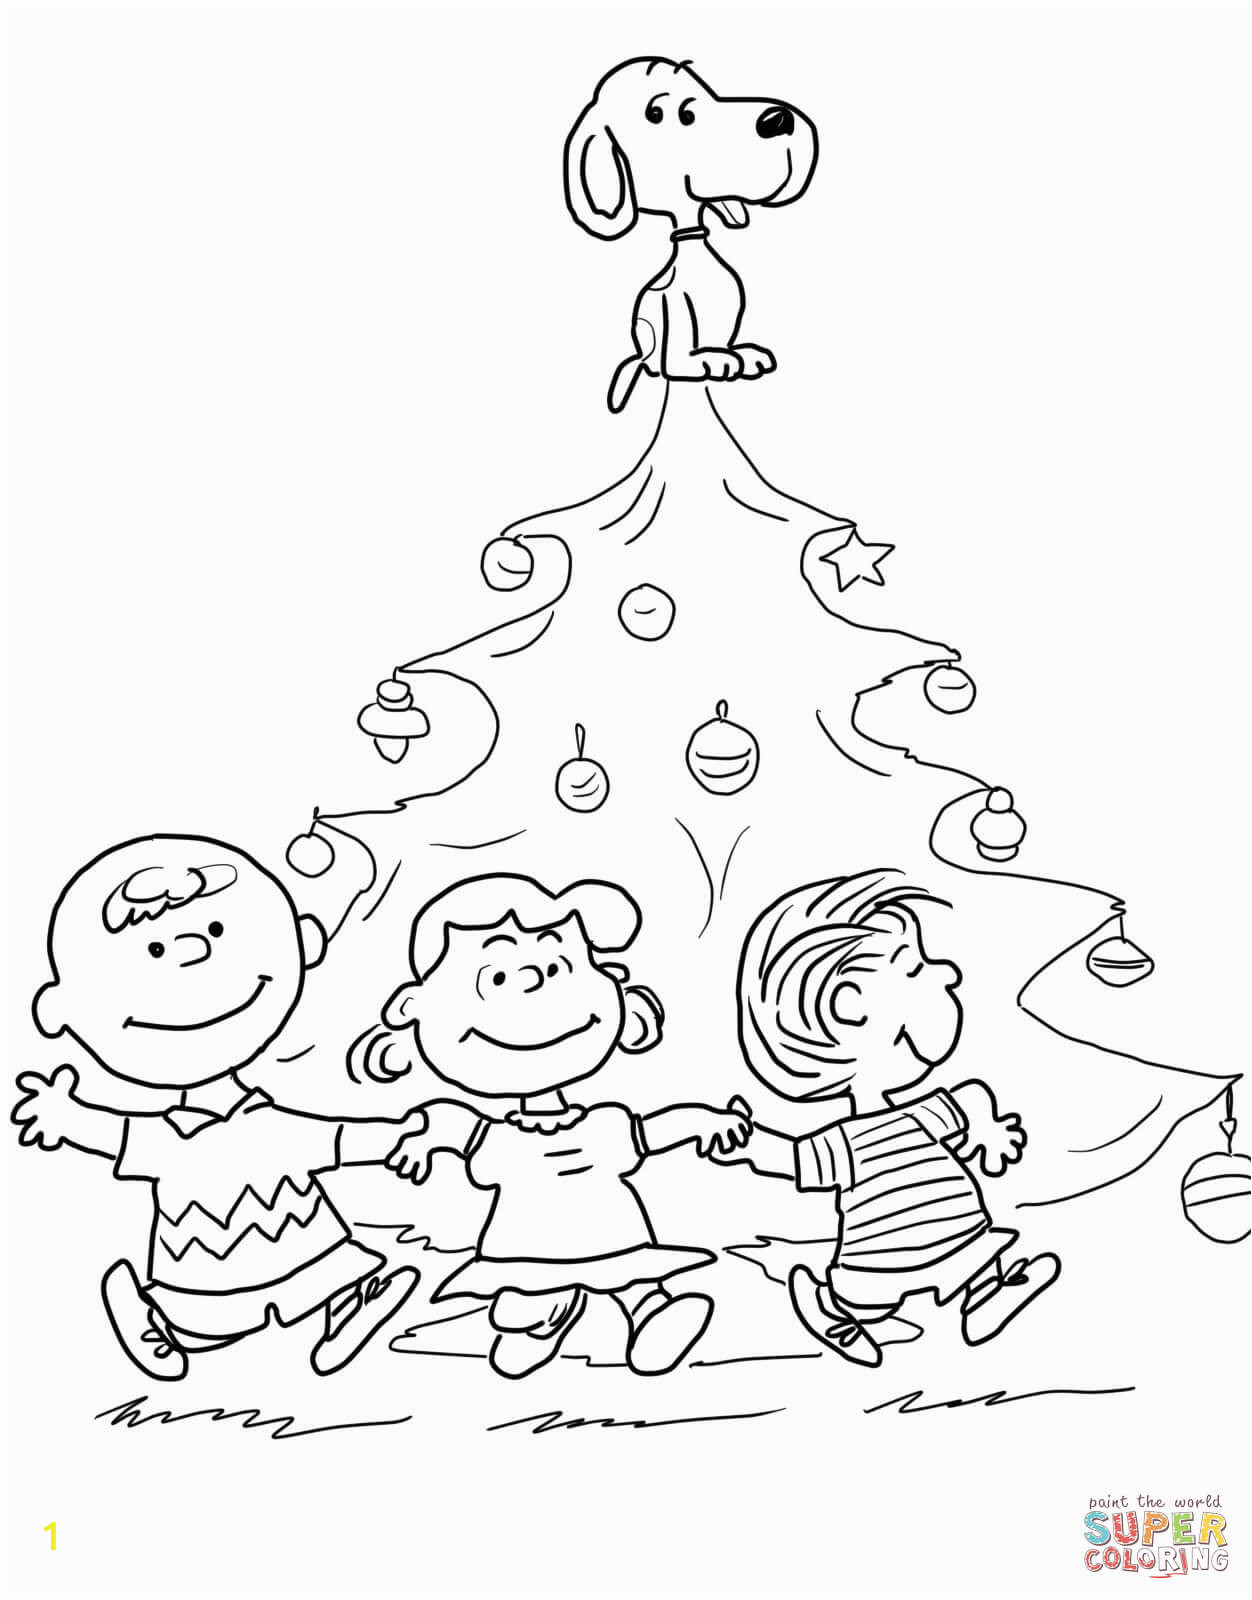 Charlie Brown Christmas Tree Coloring Page Charlie Brown Christmas Tree Coloring Page